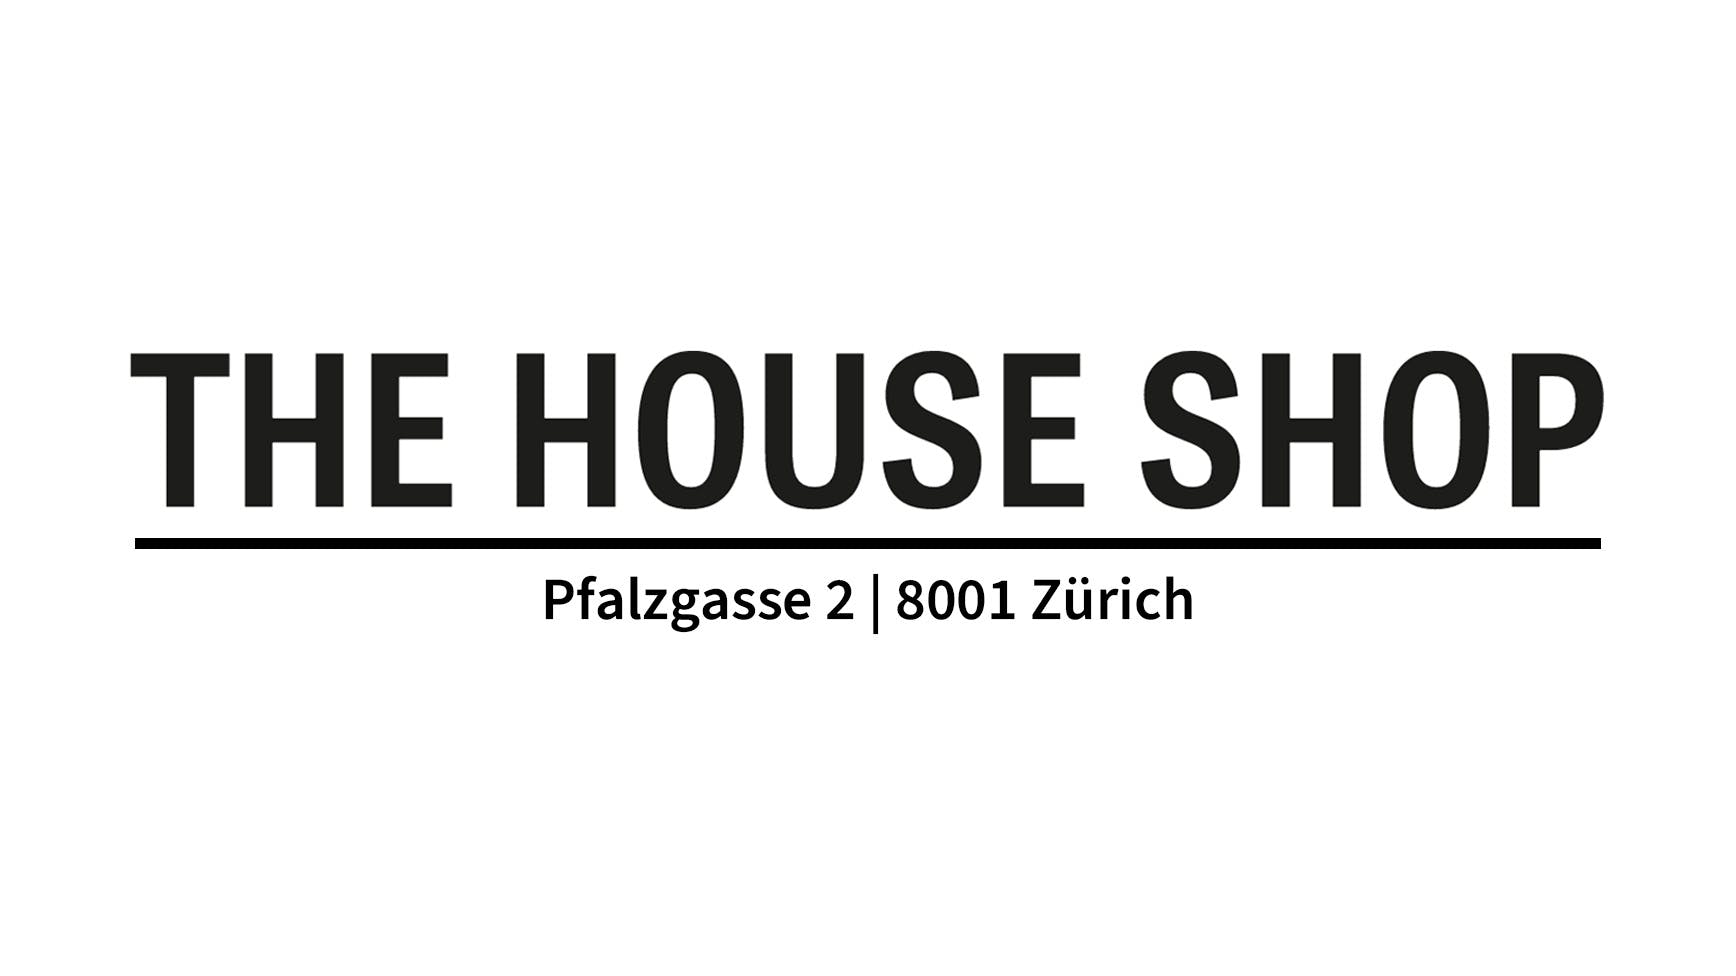 THE HOUSE SHOP